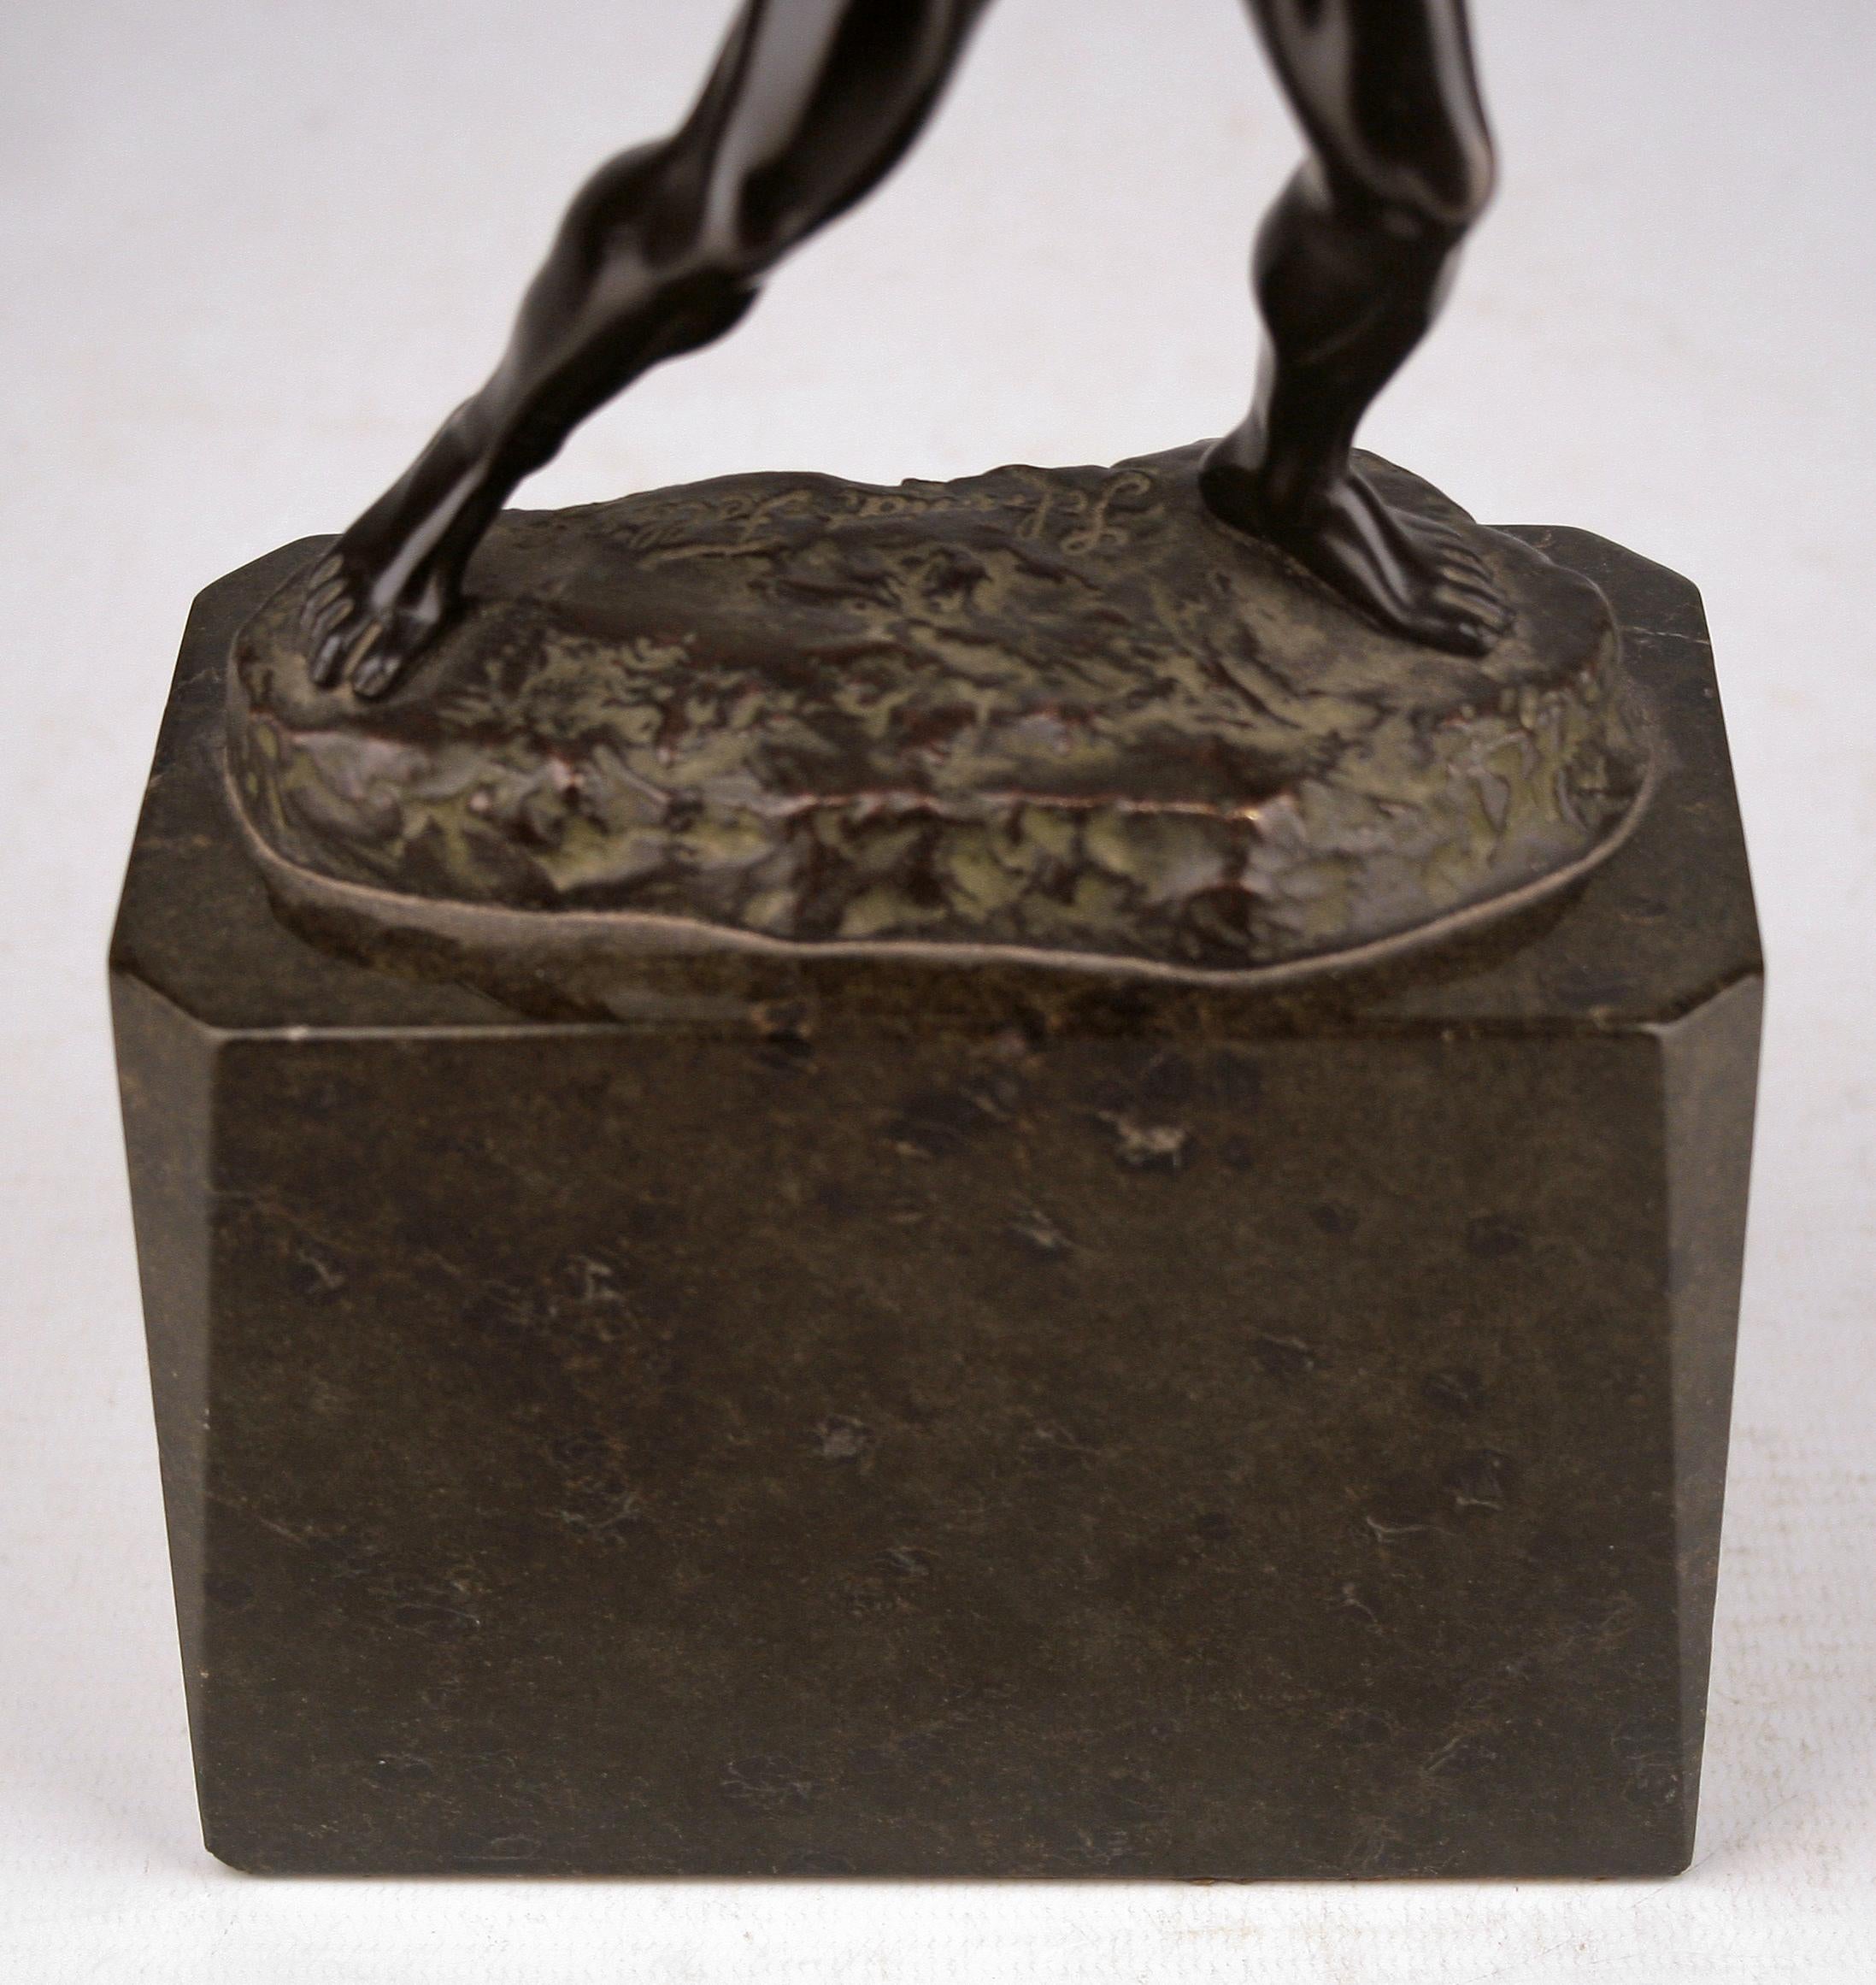 19th Century Jugendstil German Bronze Sculpture of Athlete Throwing a Ball by Schmidt-Felling For Sale